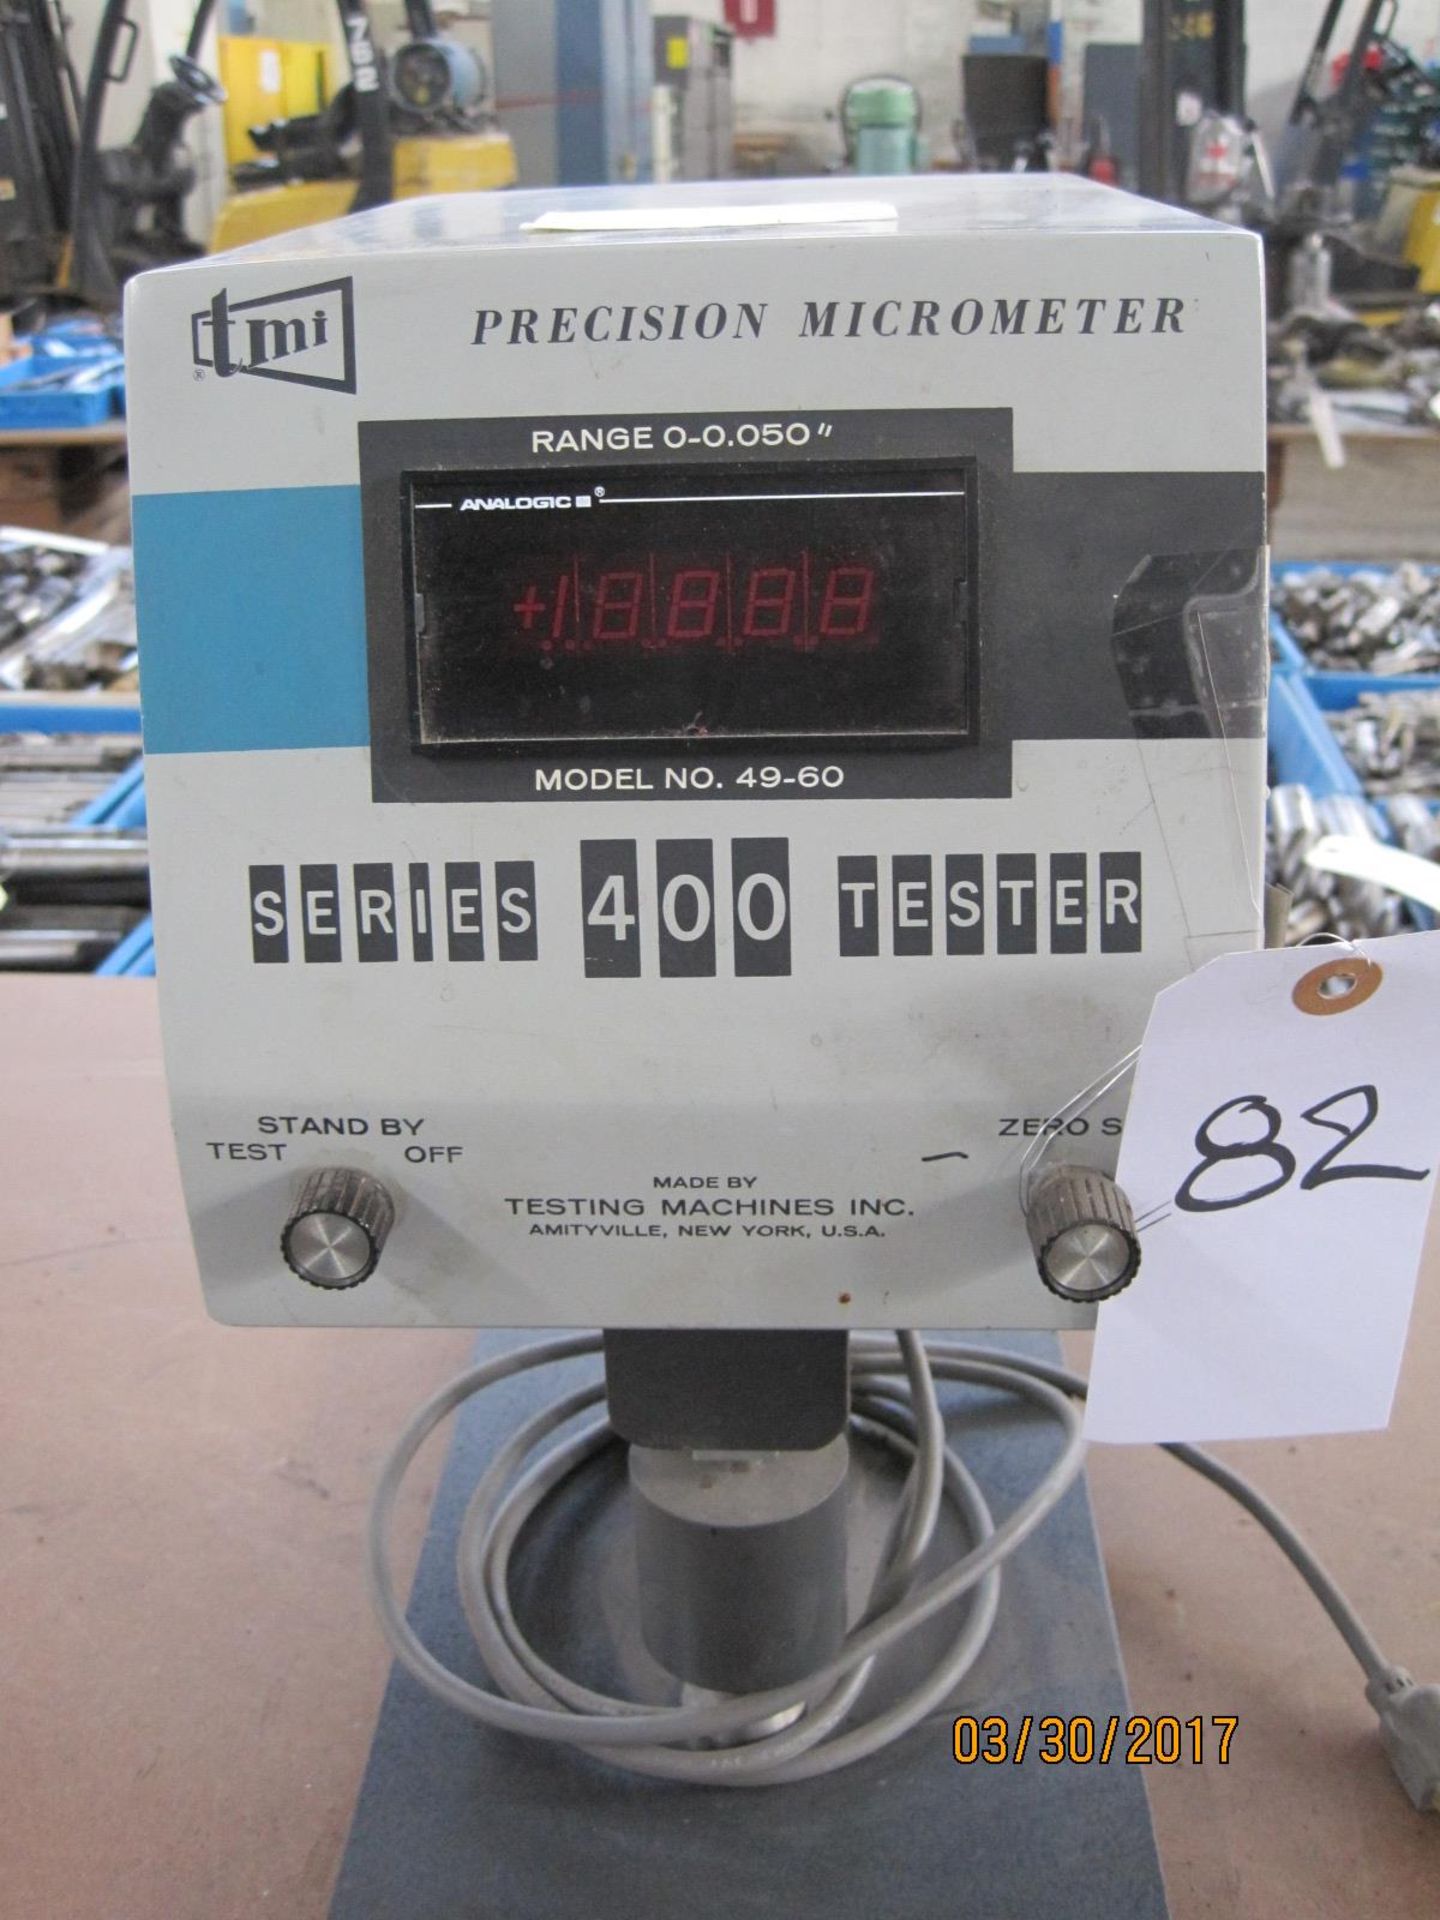 TMI precision micrometer model number 49-60